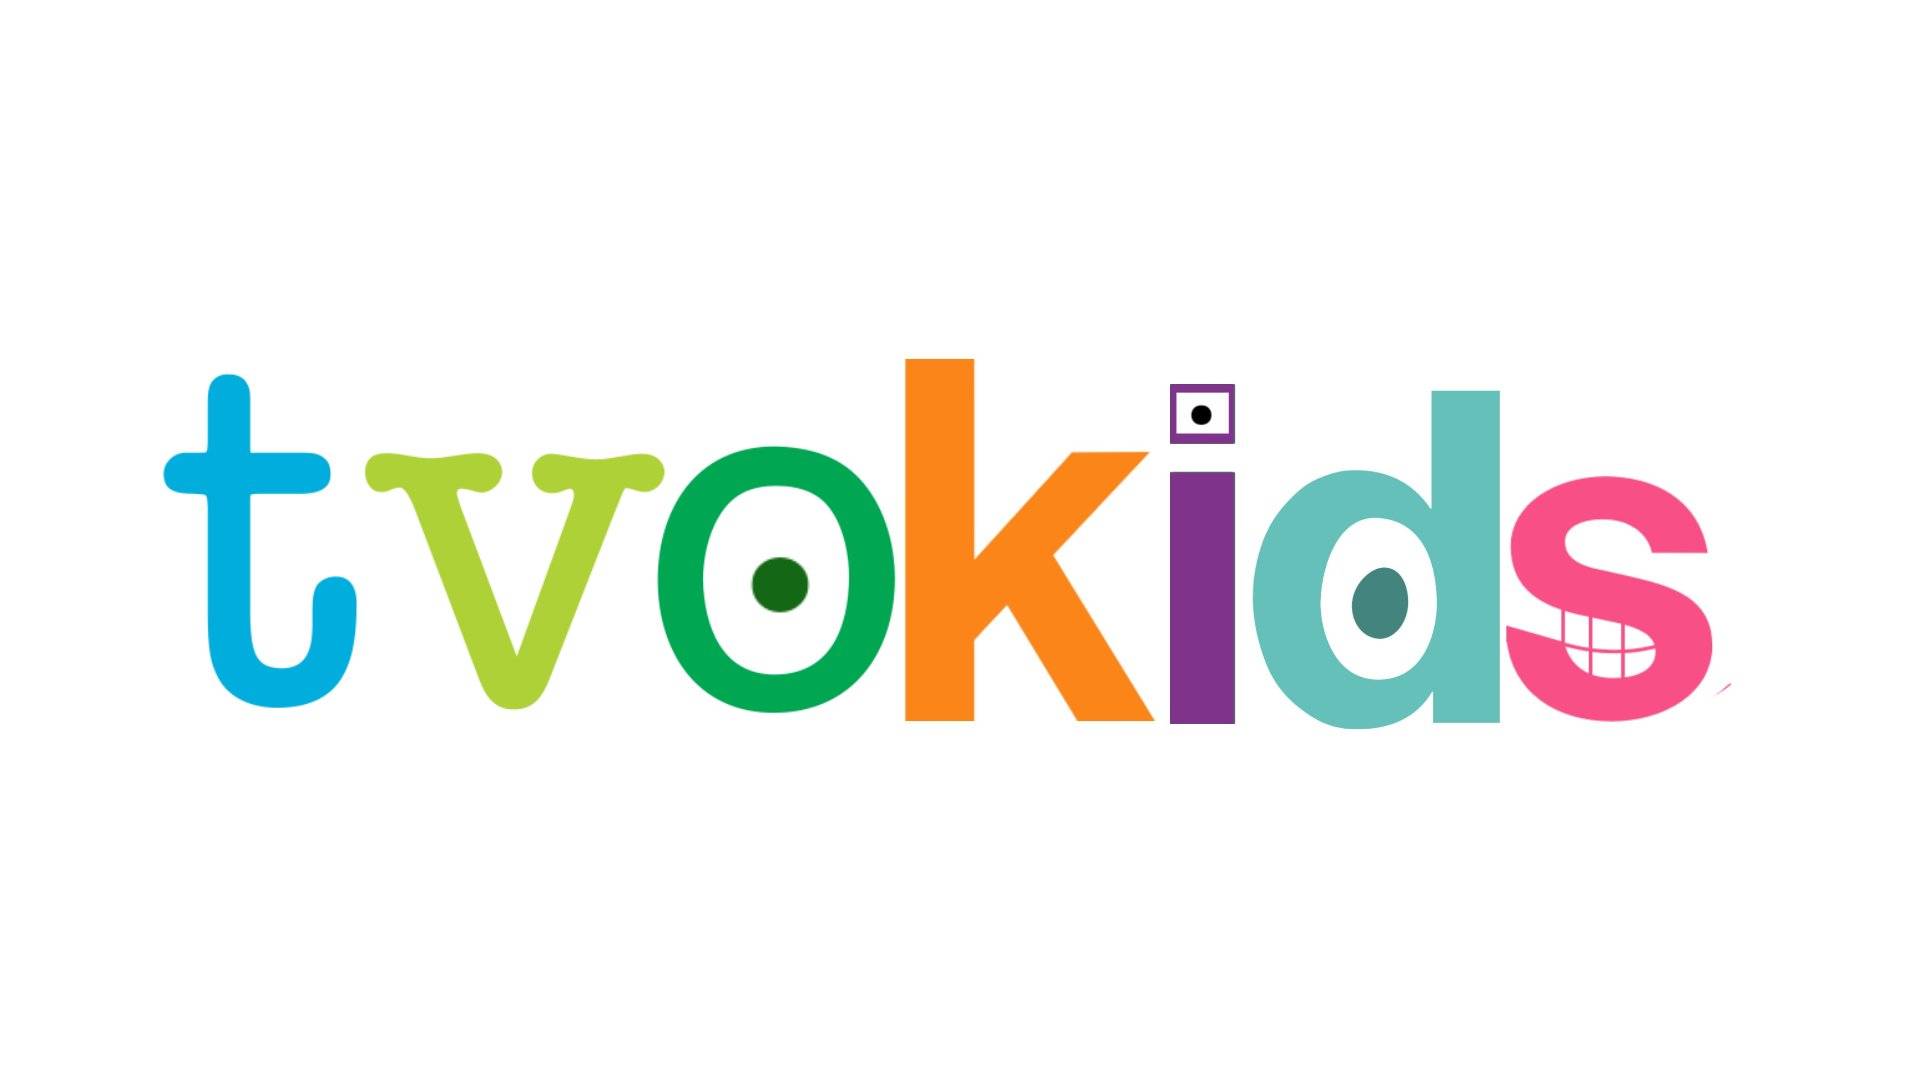 TVOKids Movies New Logo Remake 